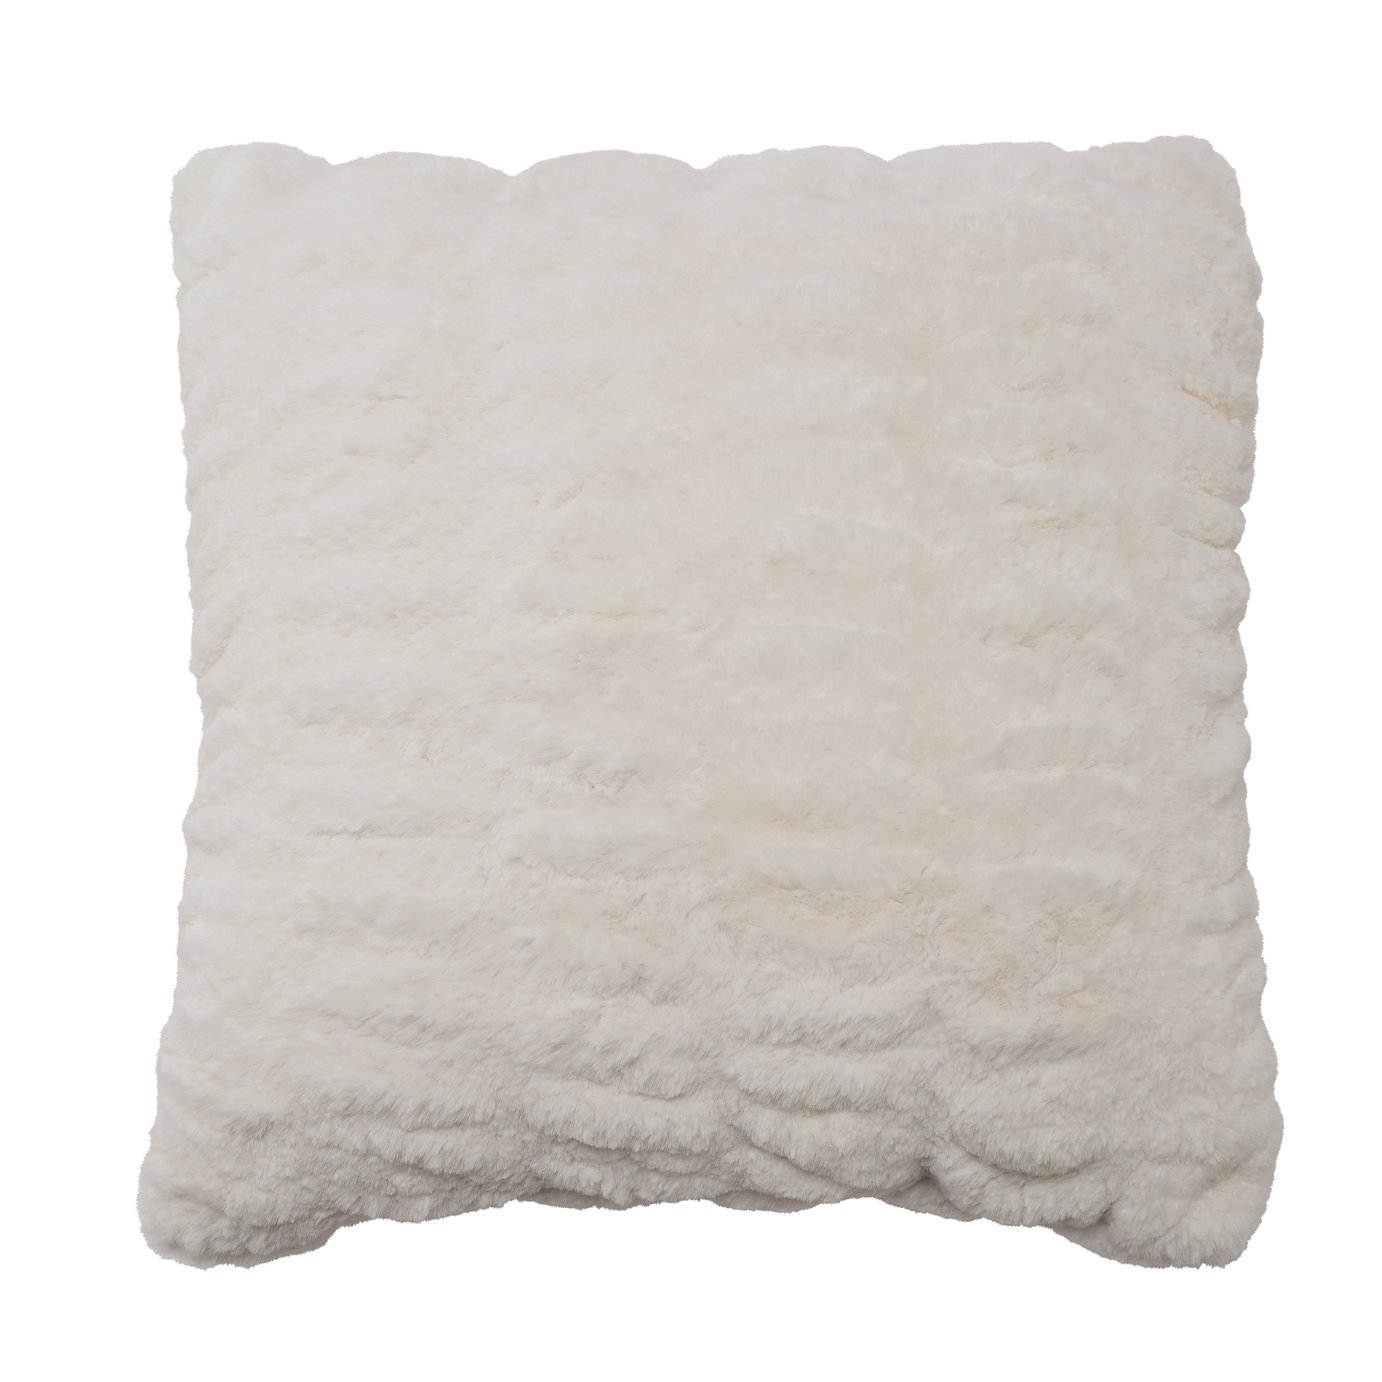 Argos Home Winter's Cabin Fur Cushion - White